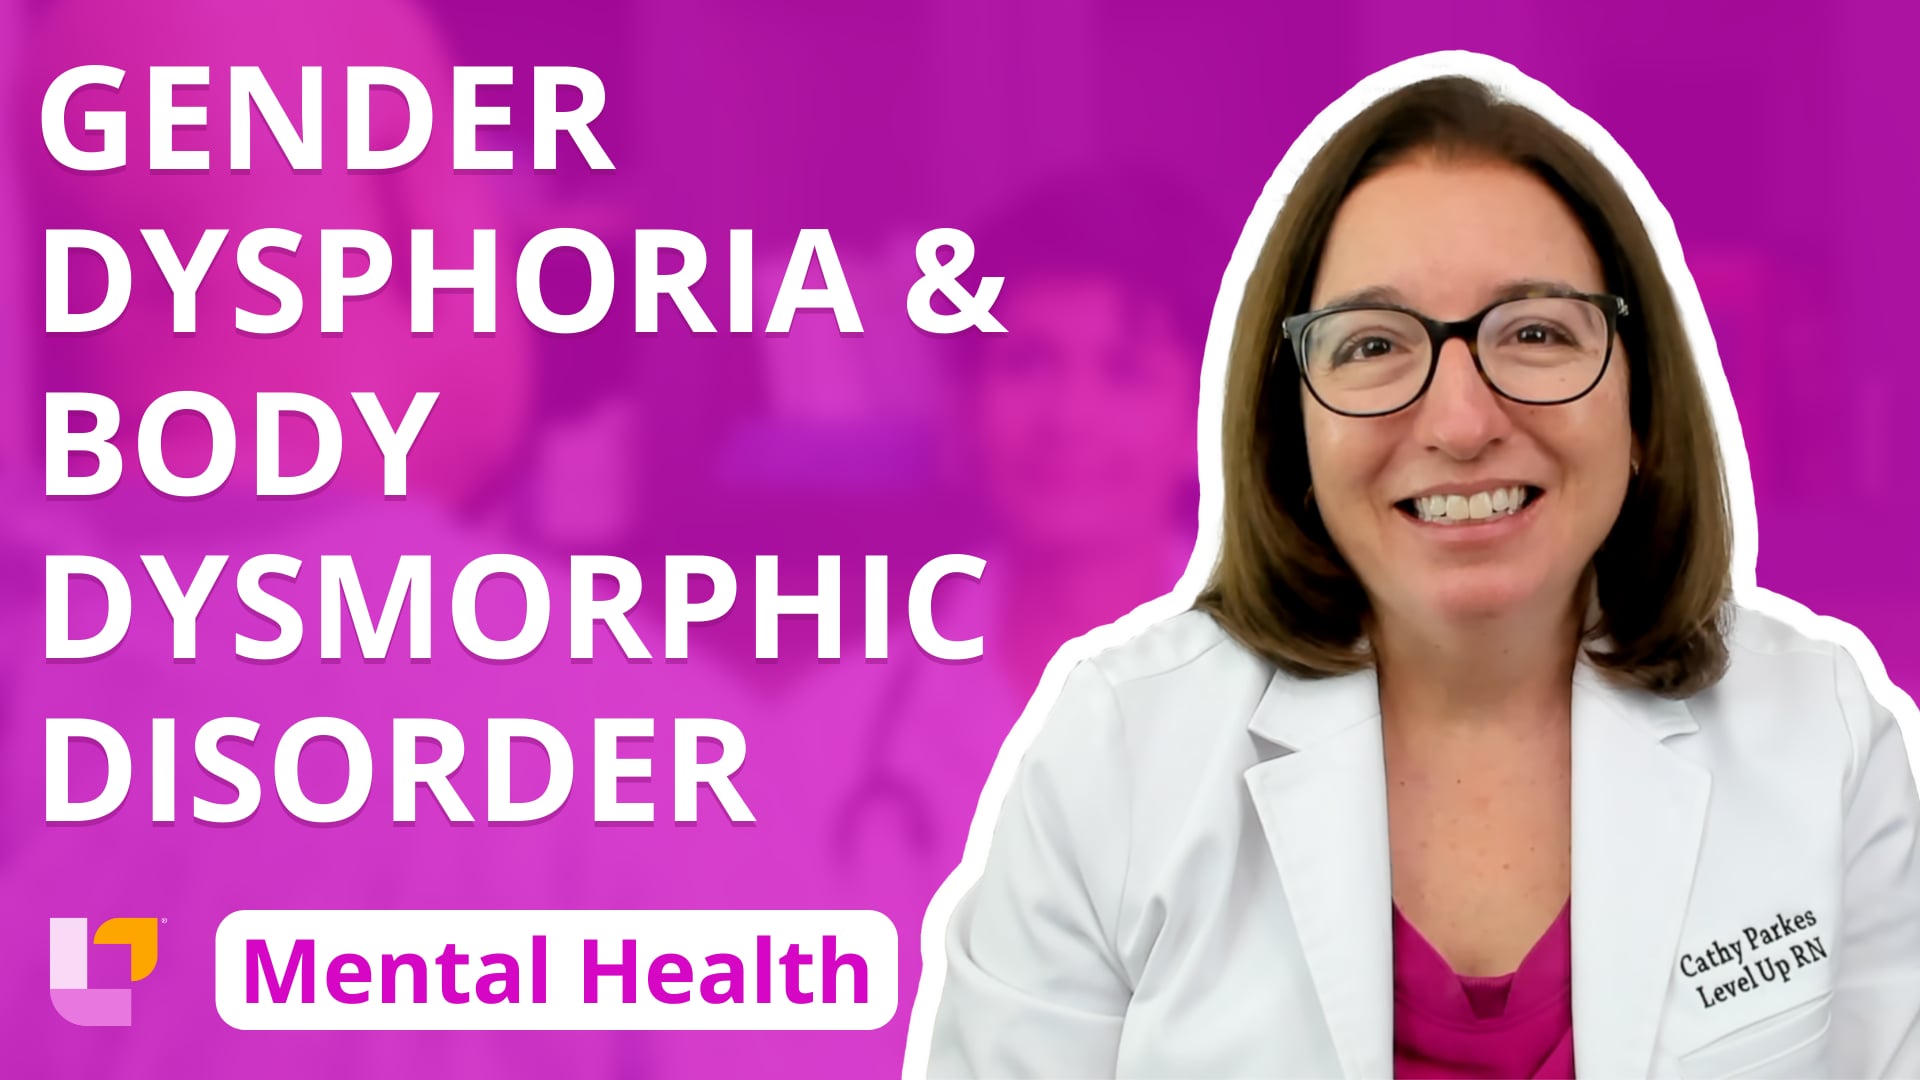 Psychiatric Mental Health - Disorders, part 36: Gender Dysphoria & Body Dysmorphic Disorder